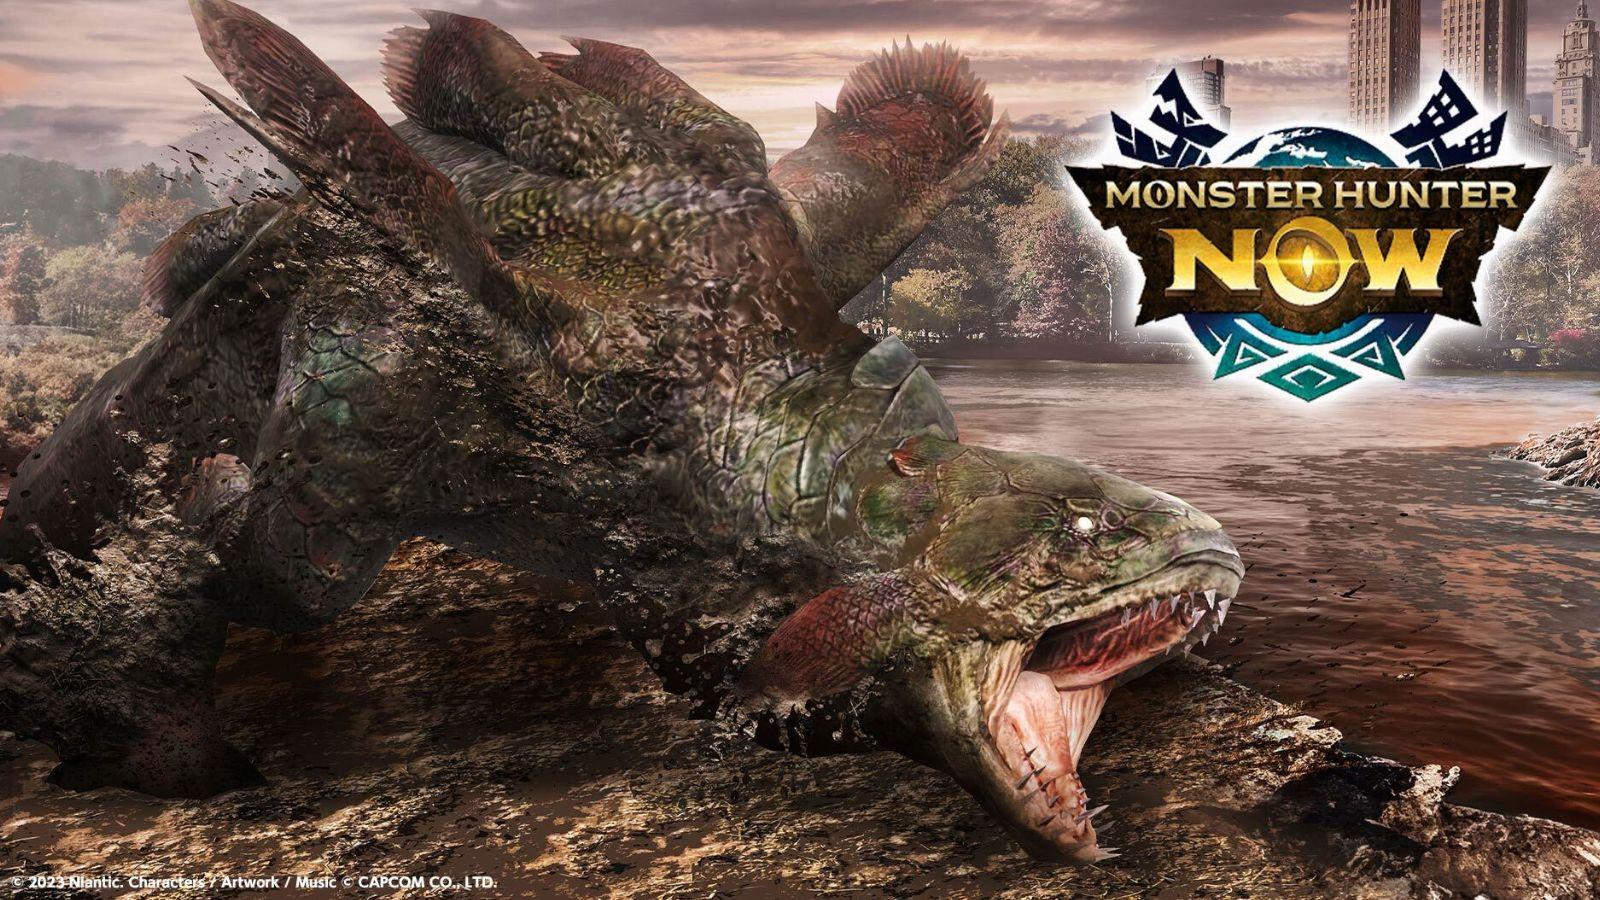 Monster Hunter Now upcoming monsters - Dexerto